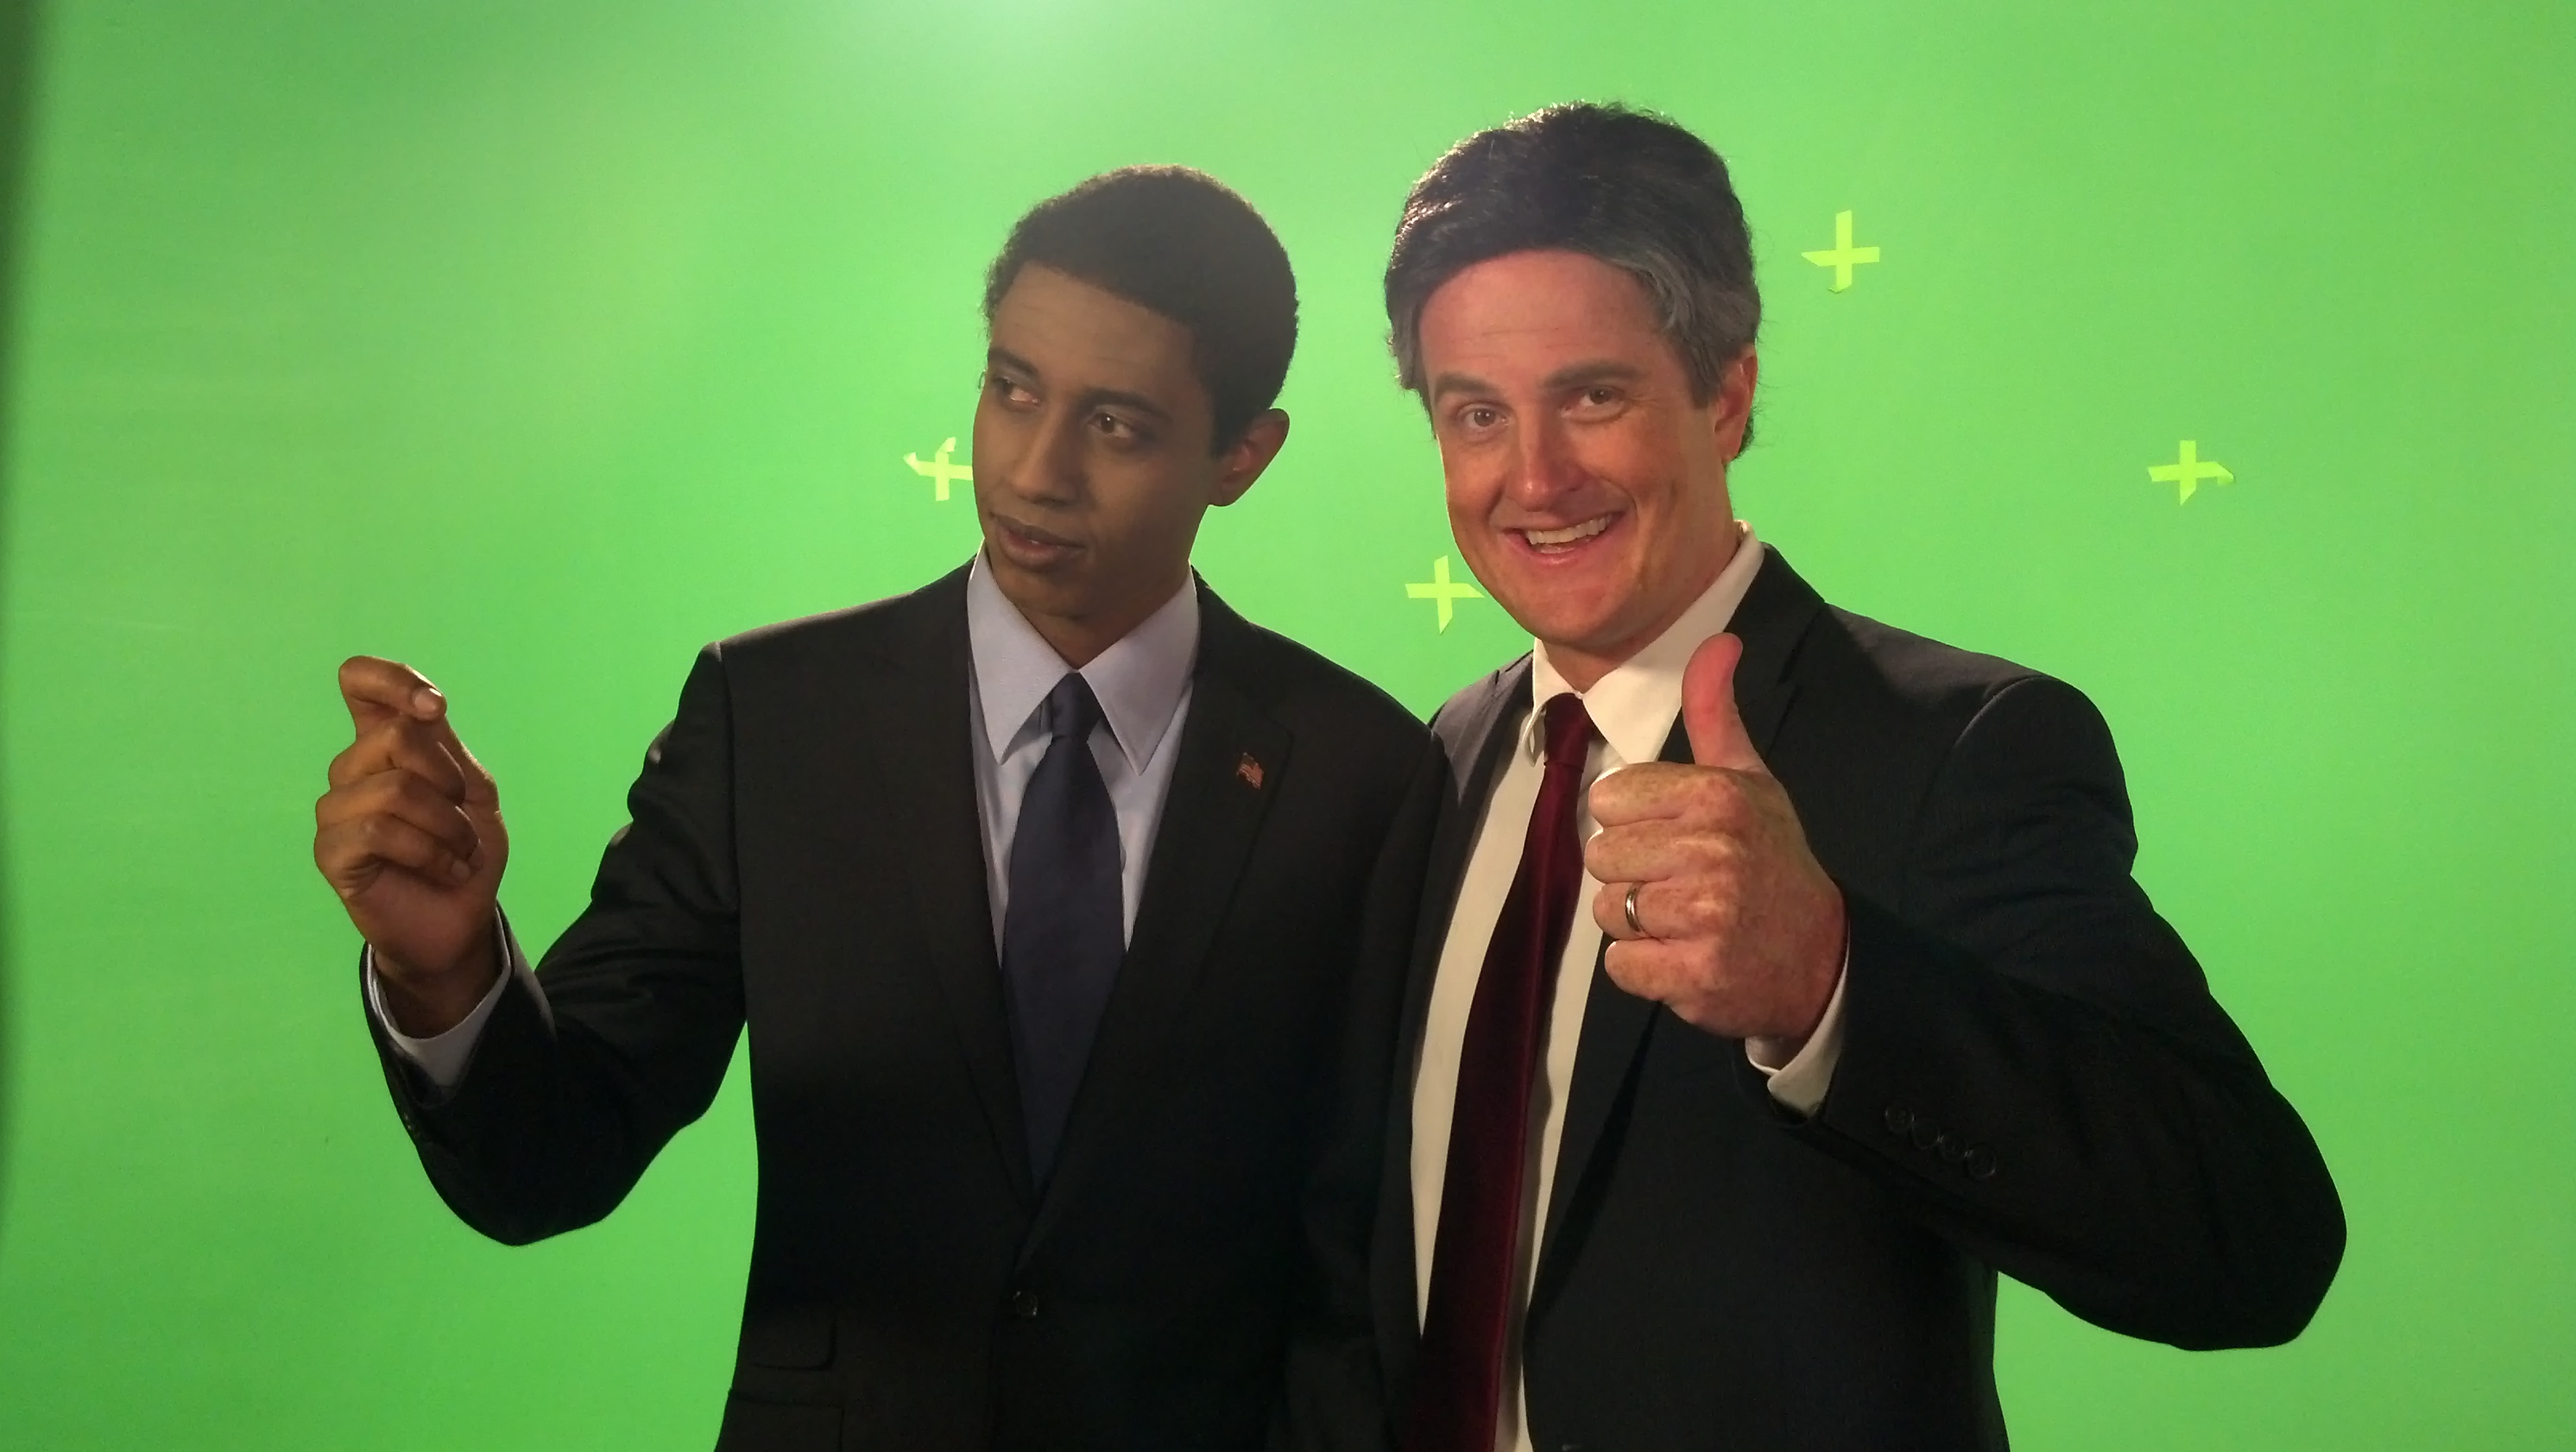 James Davis and Matt Knudsen on the set of Obama-Romney Rap Battle